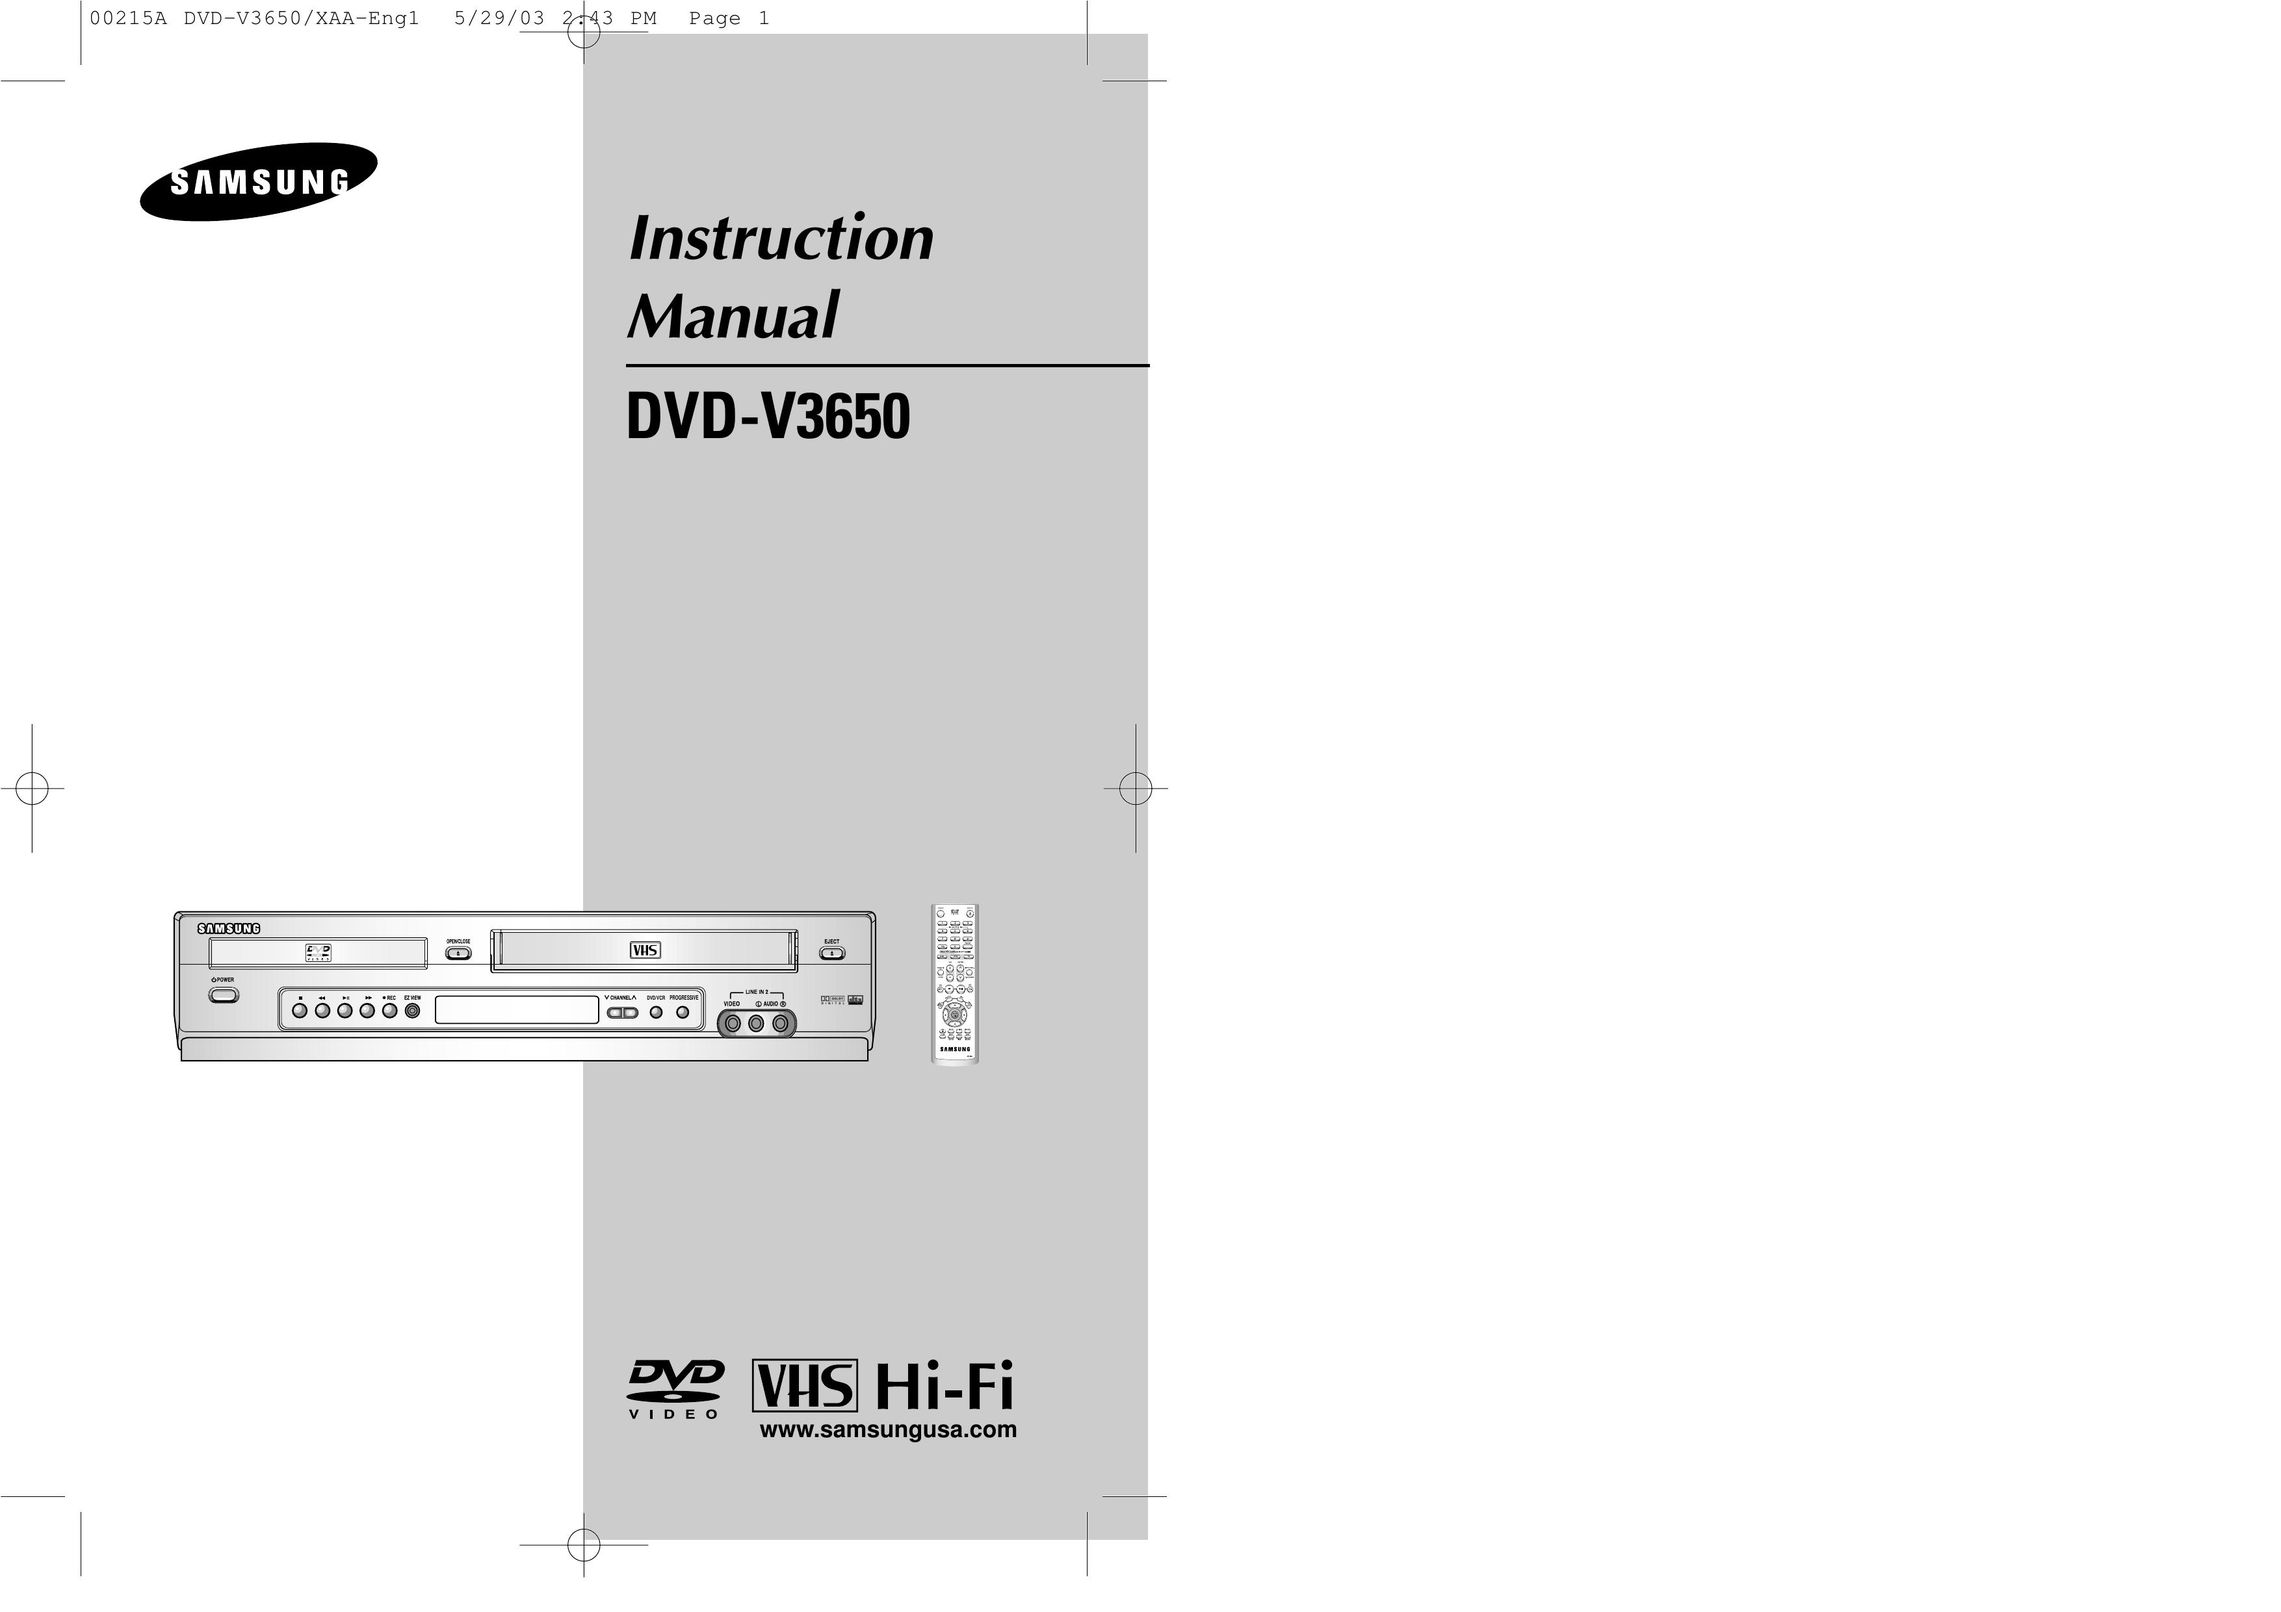 Samsung DVD-V3650 MP3 Player User Manual